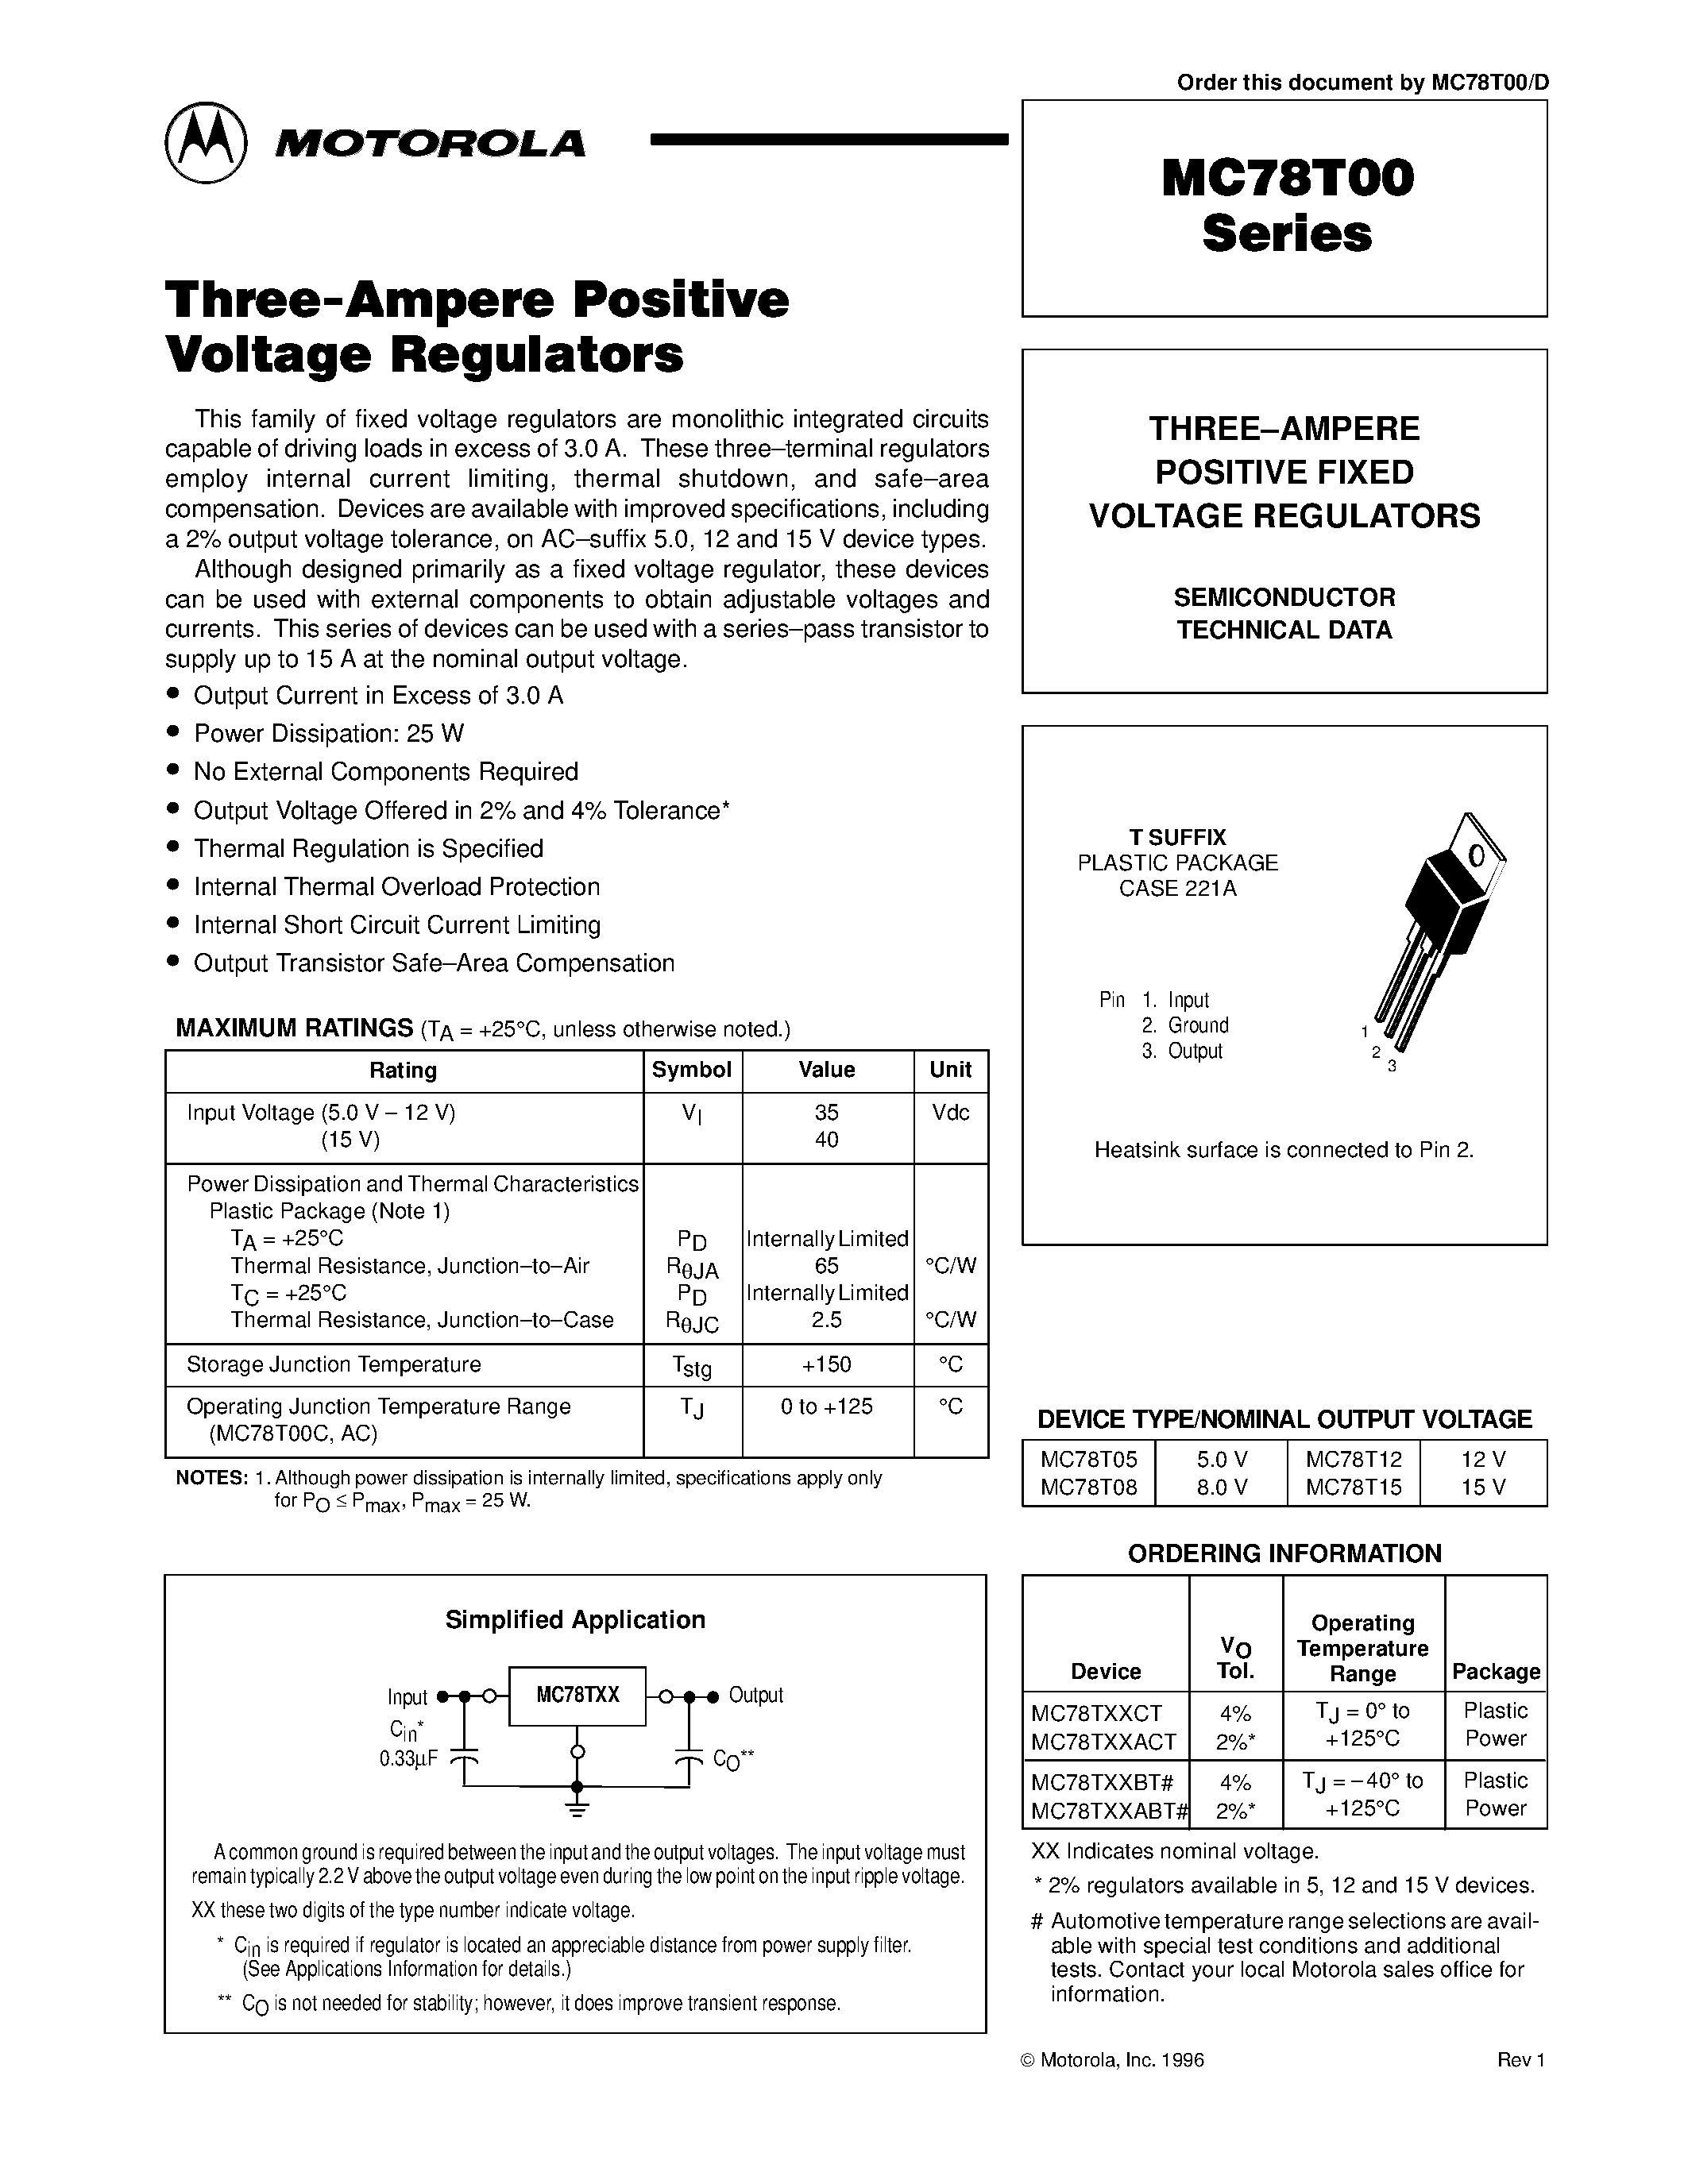 Datasheet MC78T12ACT - THREE-AMPERE POSITIVE FIXED VOLTAGE REGULATORS page 1